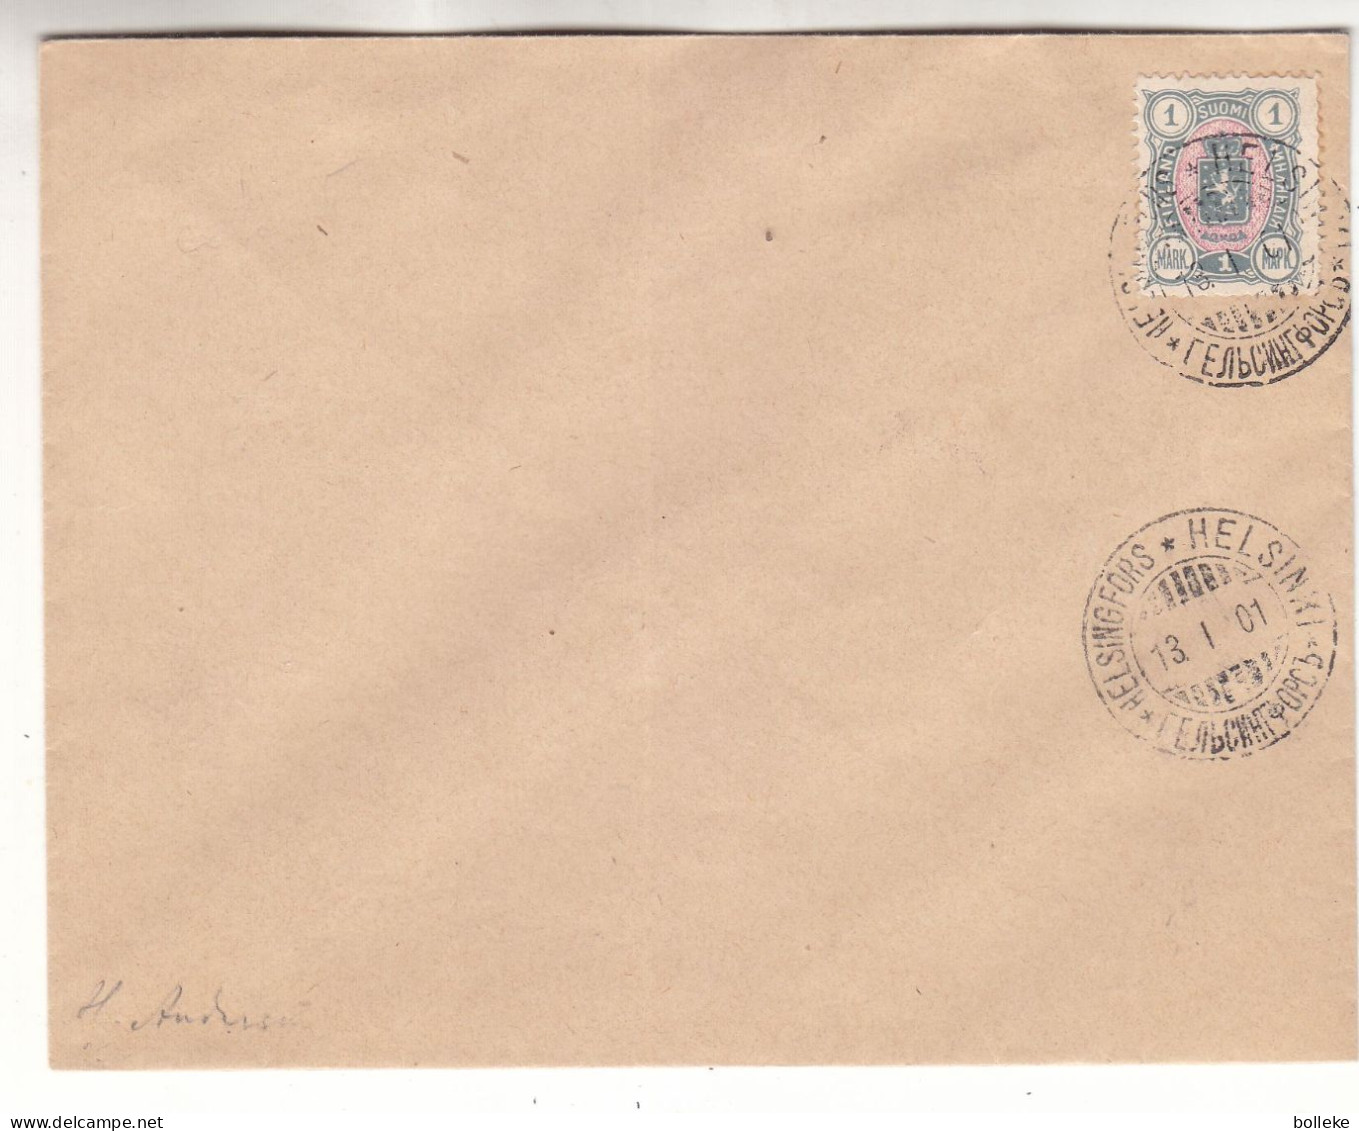 Finlande - Lettre De 1901 - Oblit Helsinki - Signée - Valeur 100 Euros - Briefe U. Dokumente